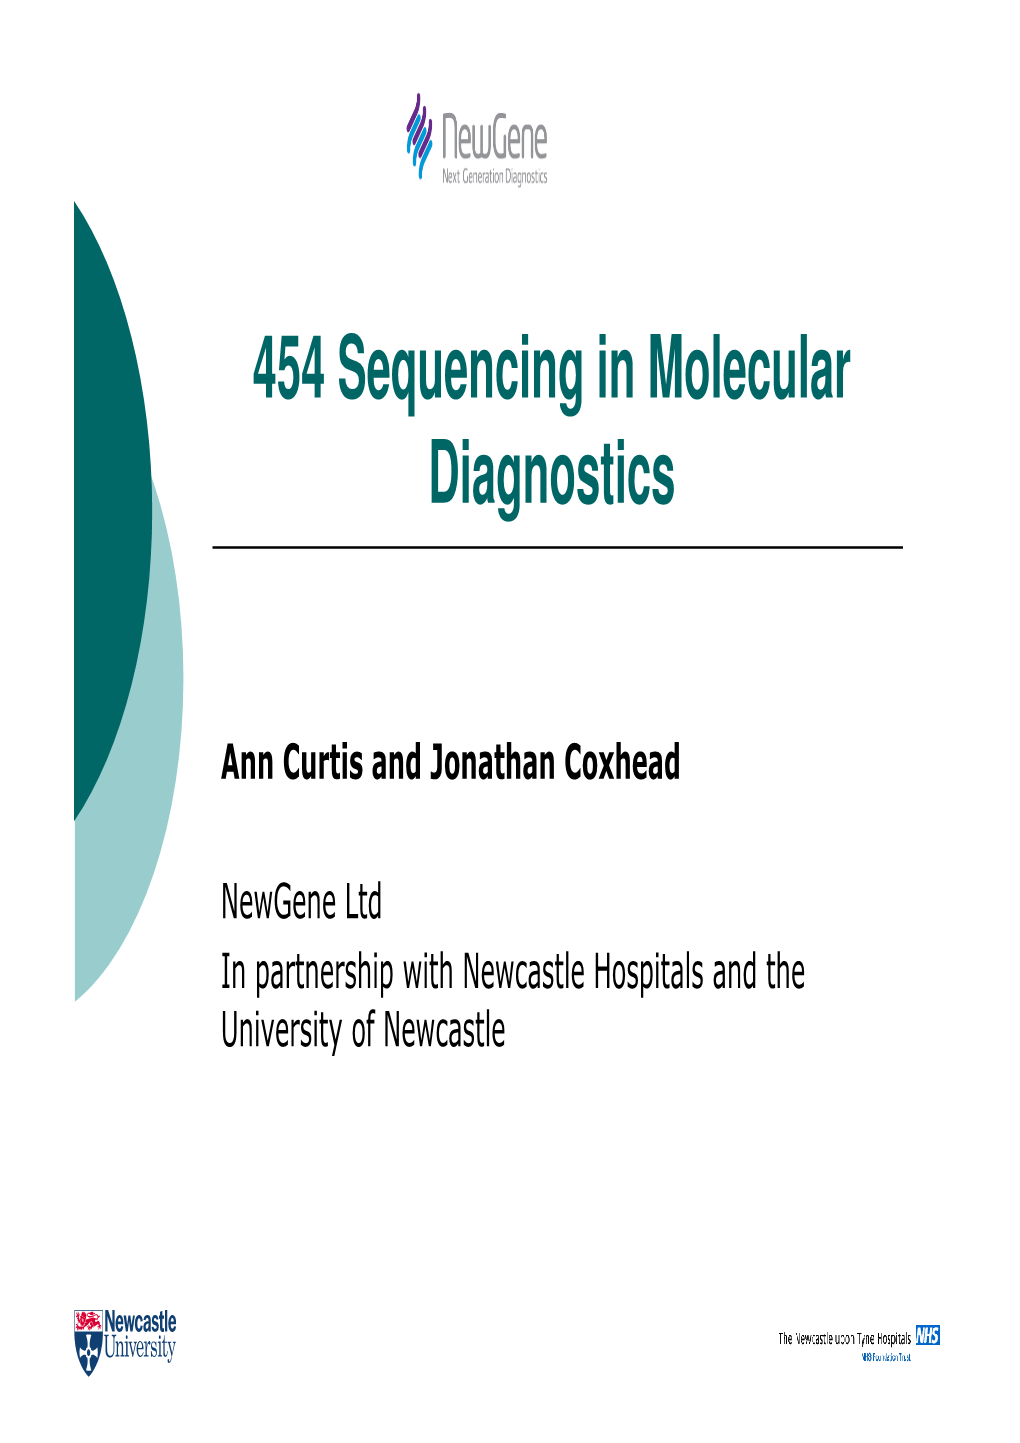 454 Sequencing in Molecular Diagnostics